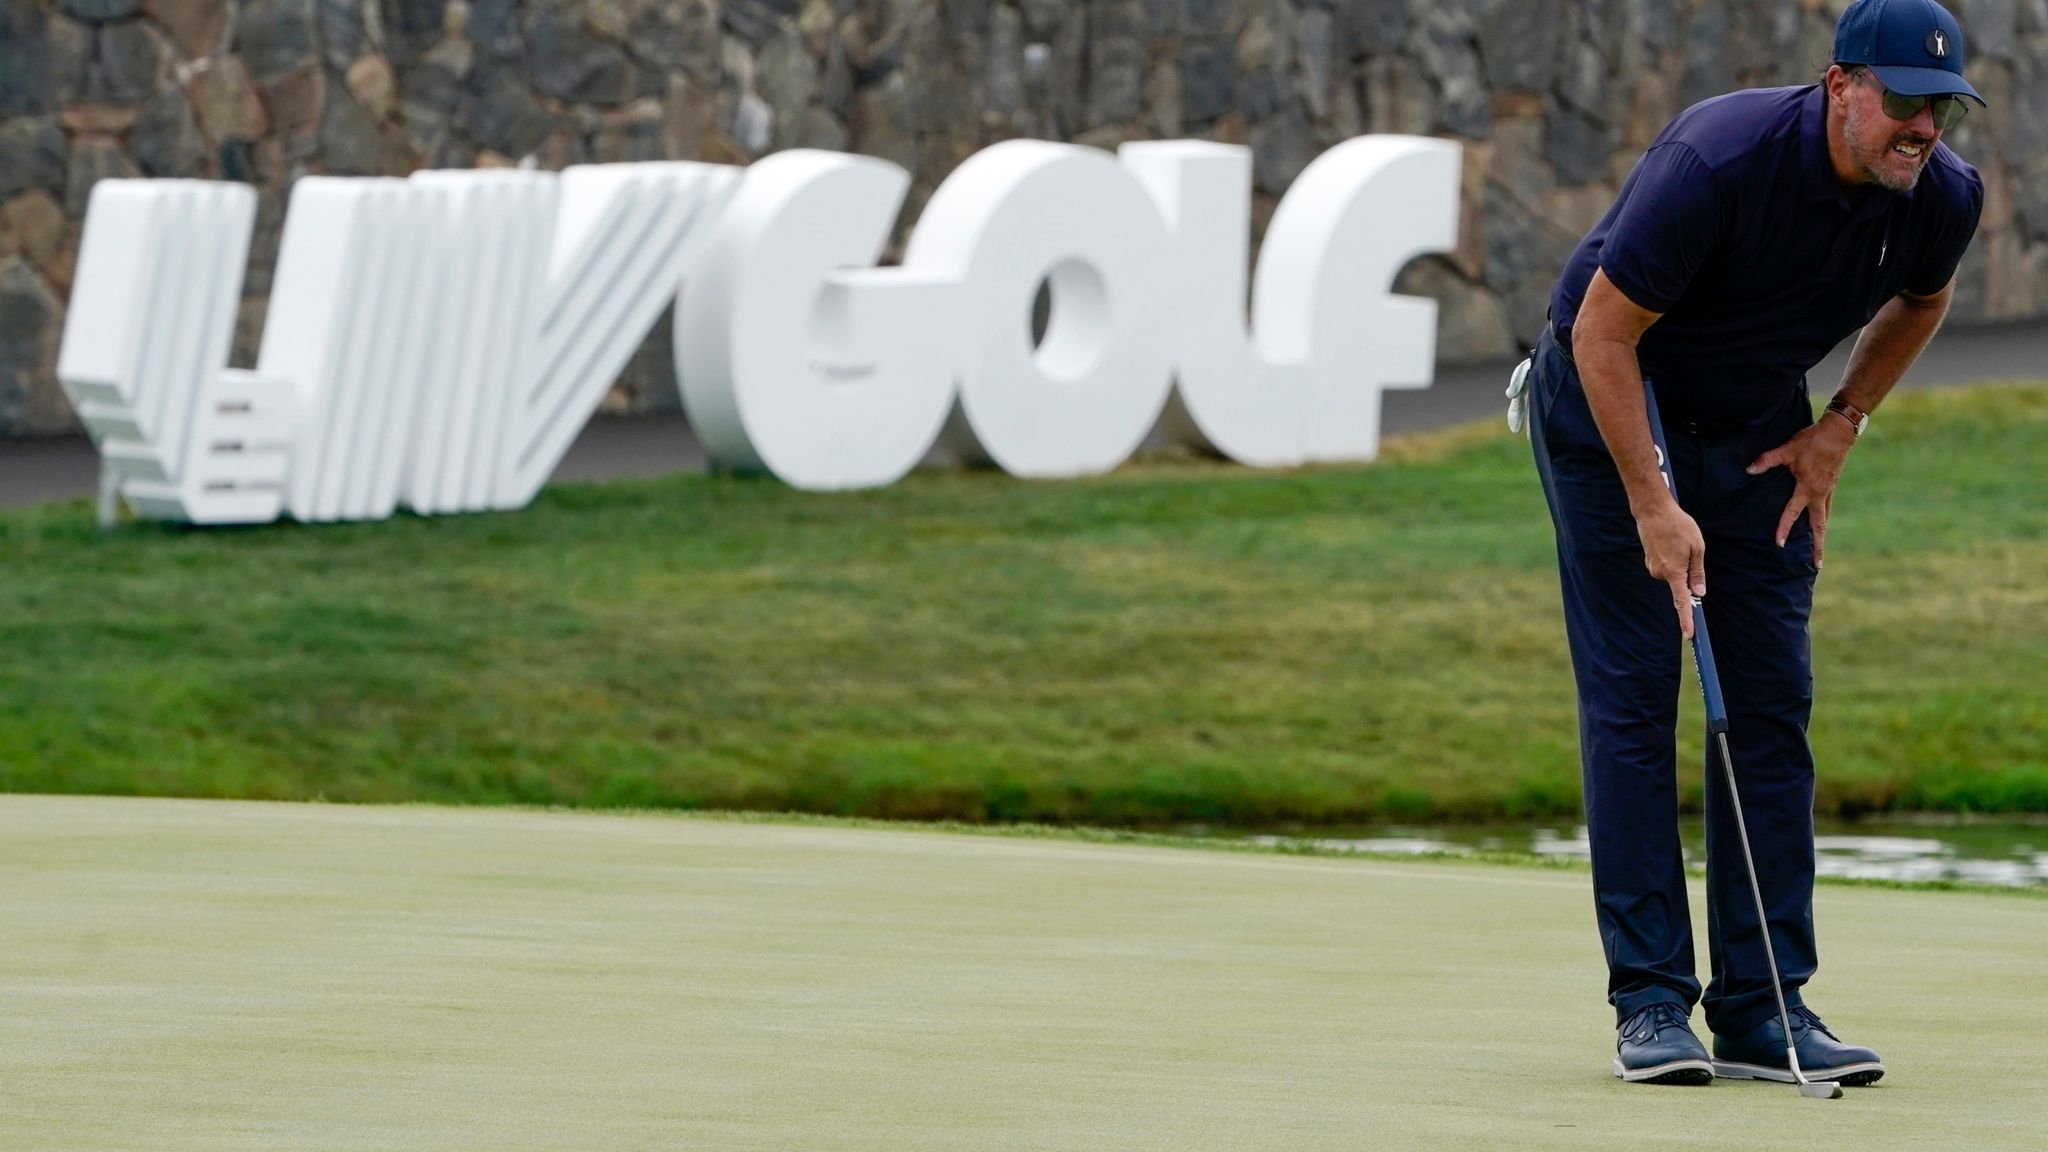 The merger of the PGA Tour, European Tour and LIV Golf unifies